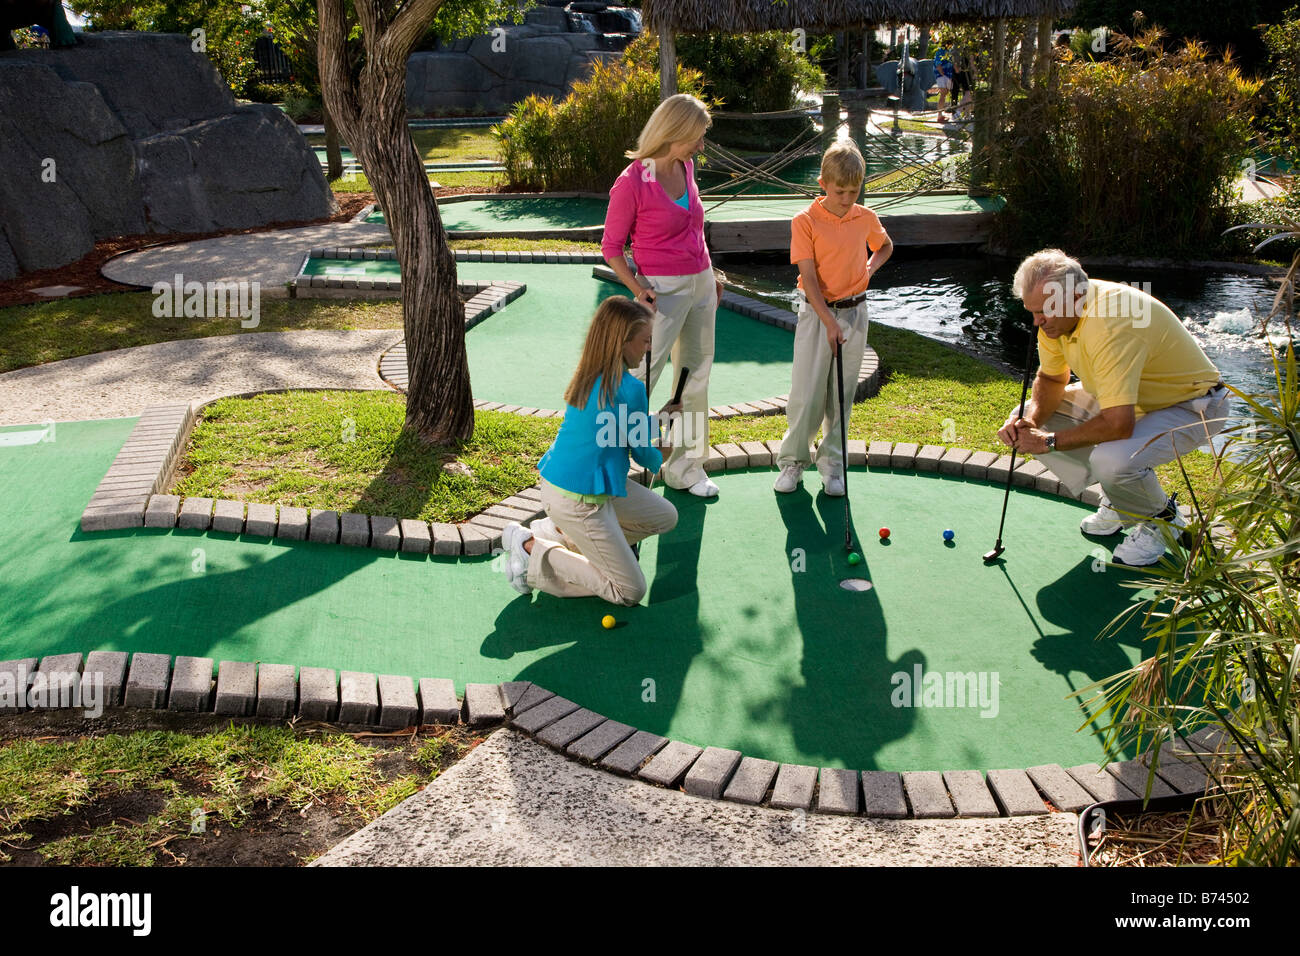 Family playing miniature golf Stock Photo - Alamy